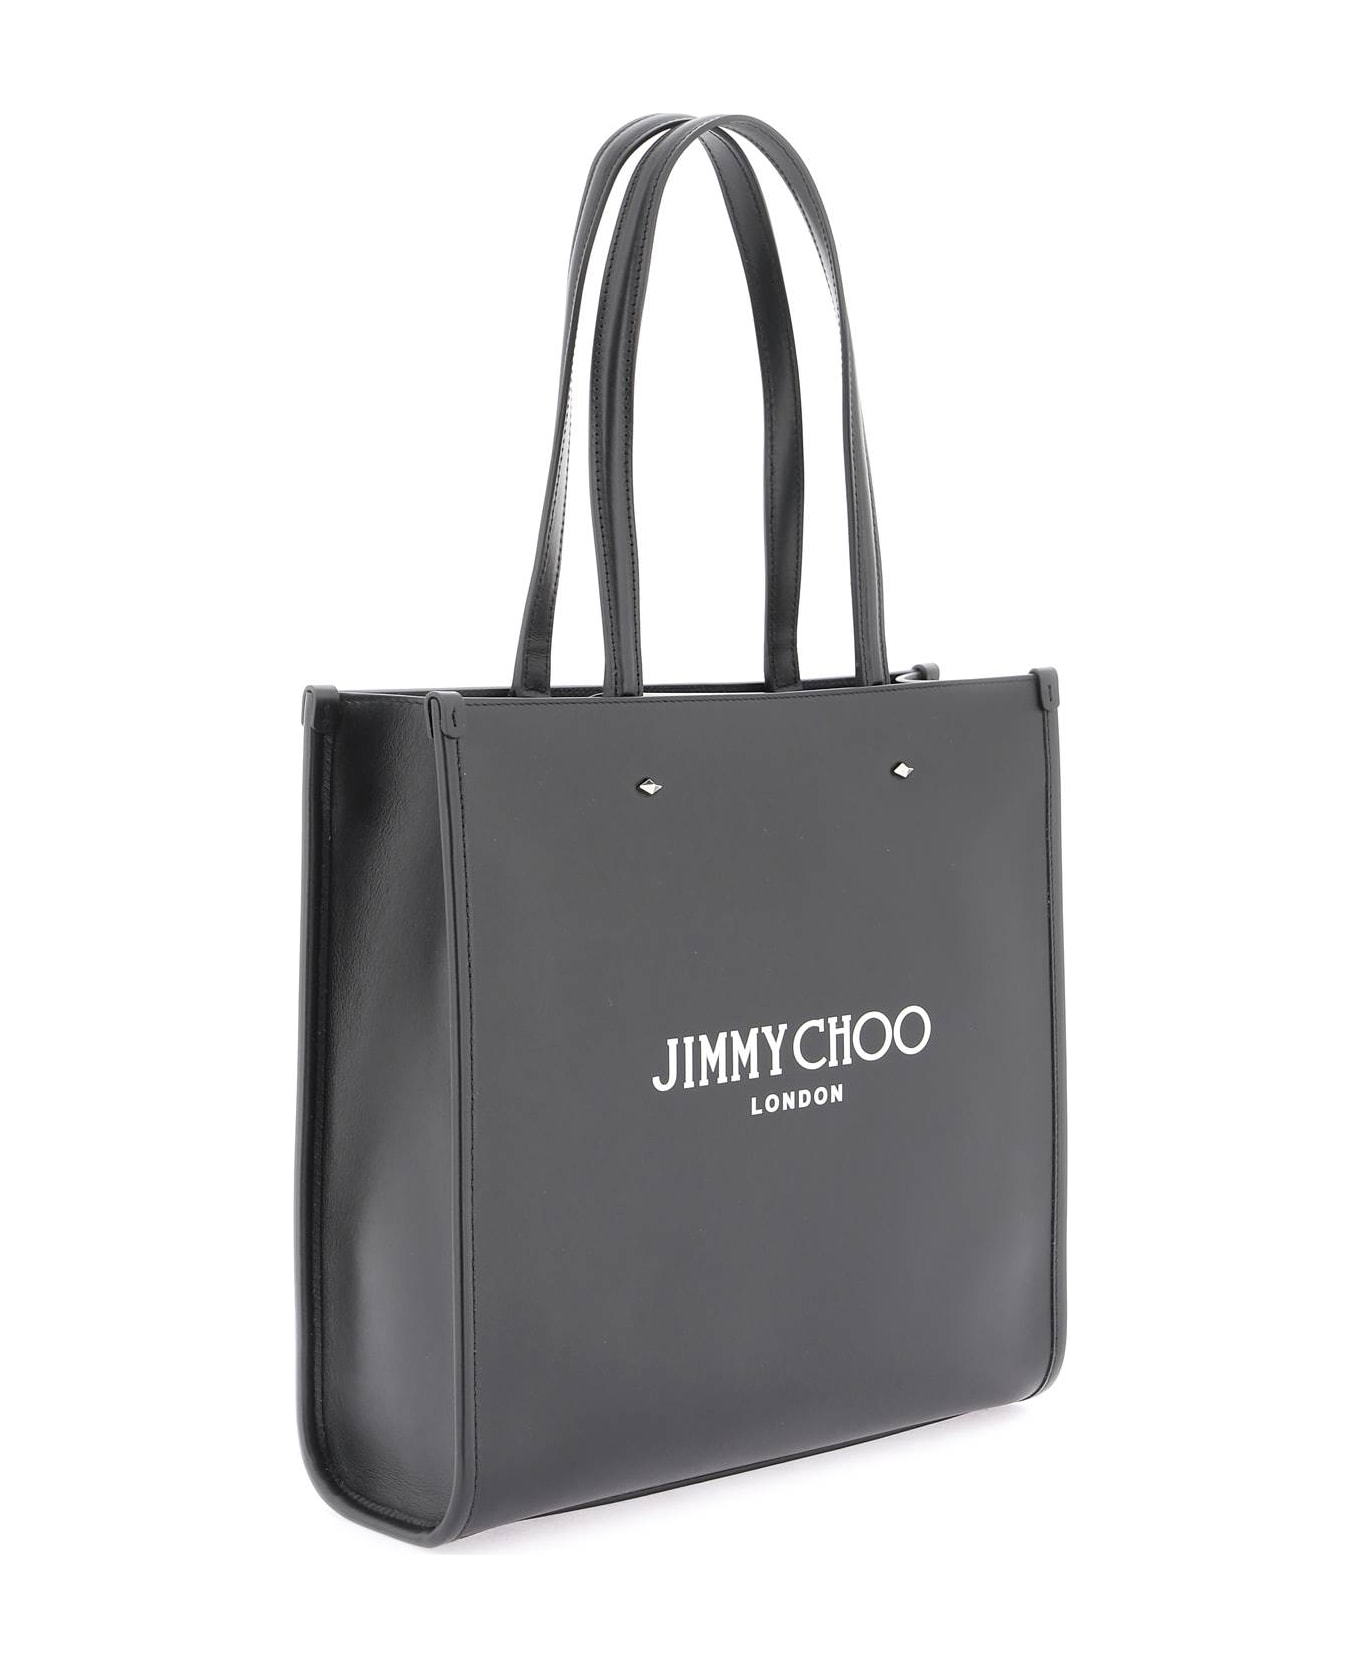 Jimmy Choo Leather Tote Bag - BLACK WHITE SILVER (Black)